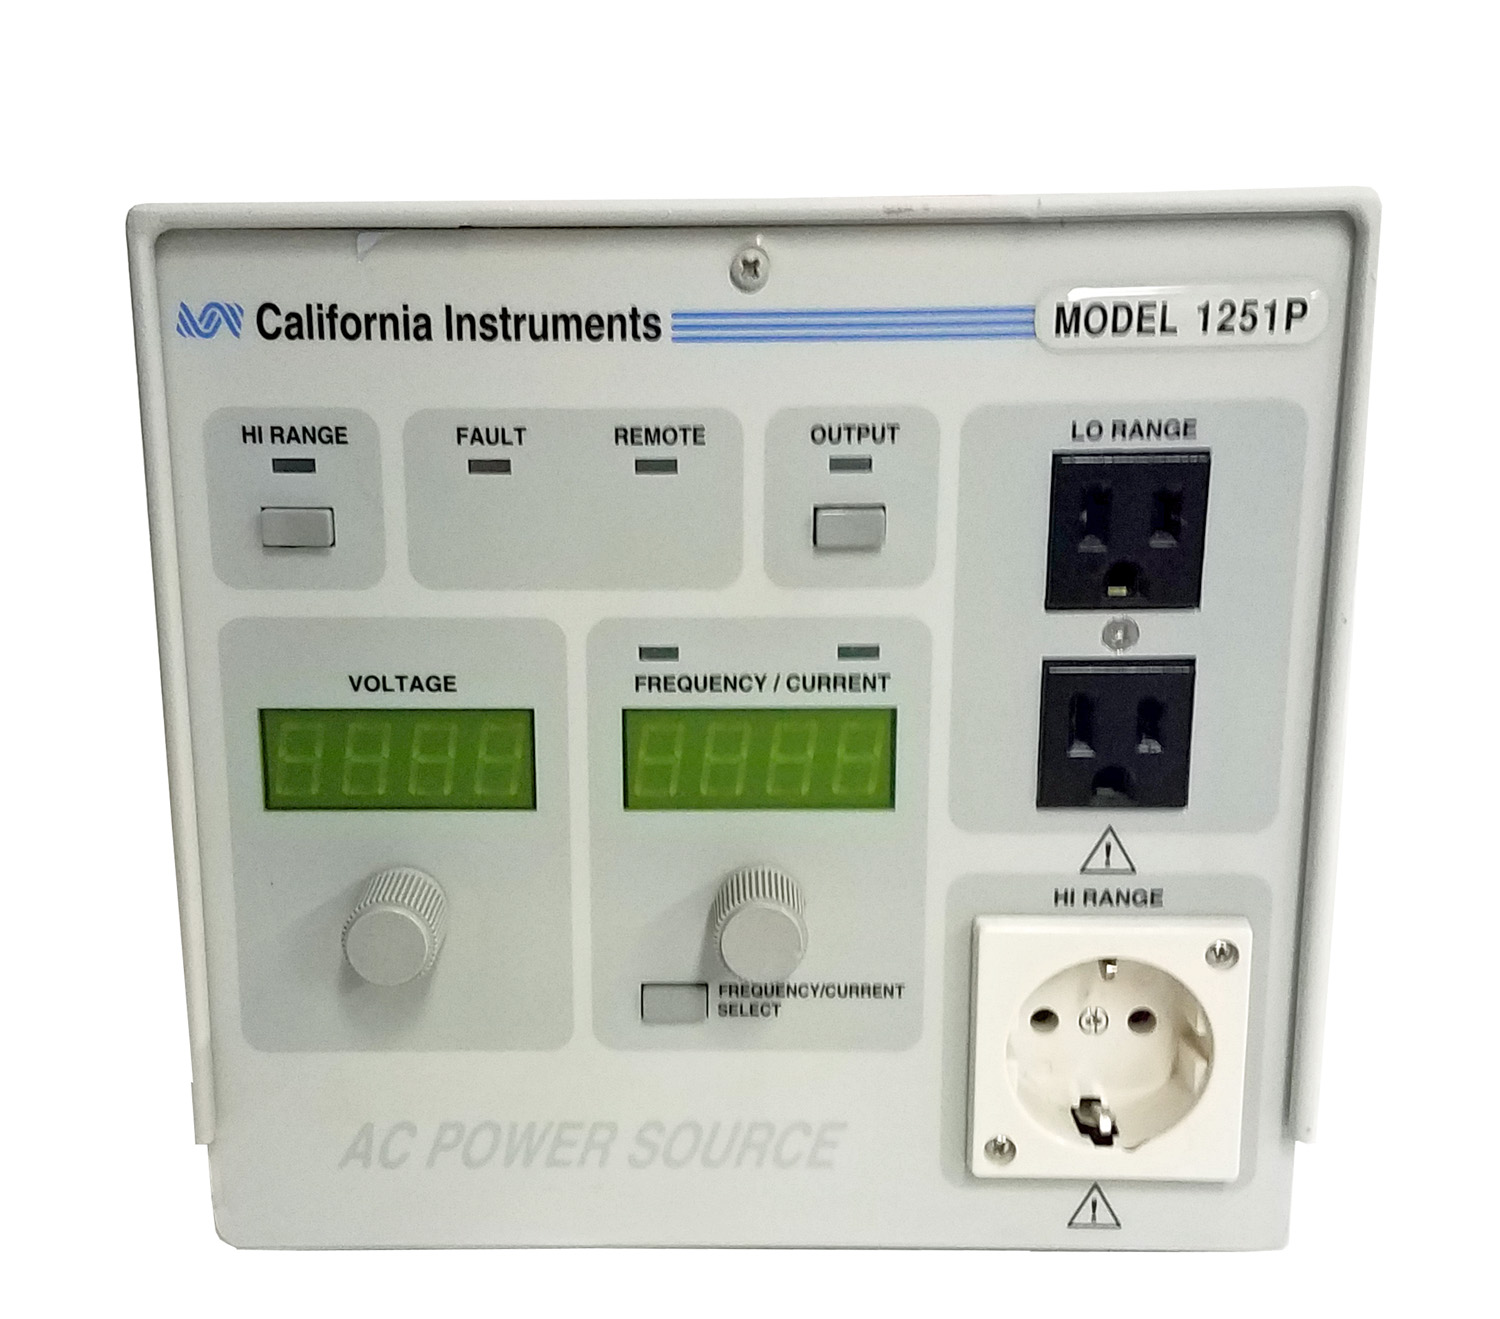 Similar product is California Instrument 1251P